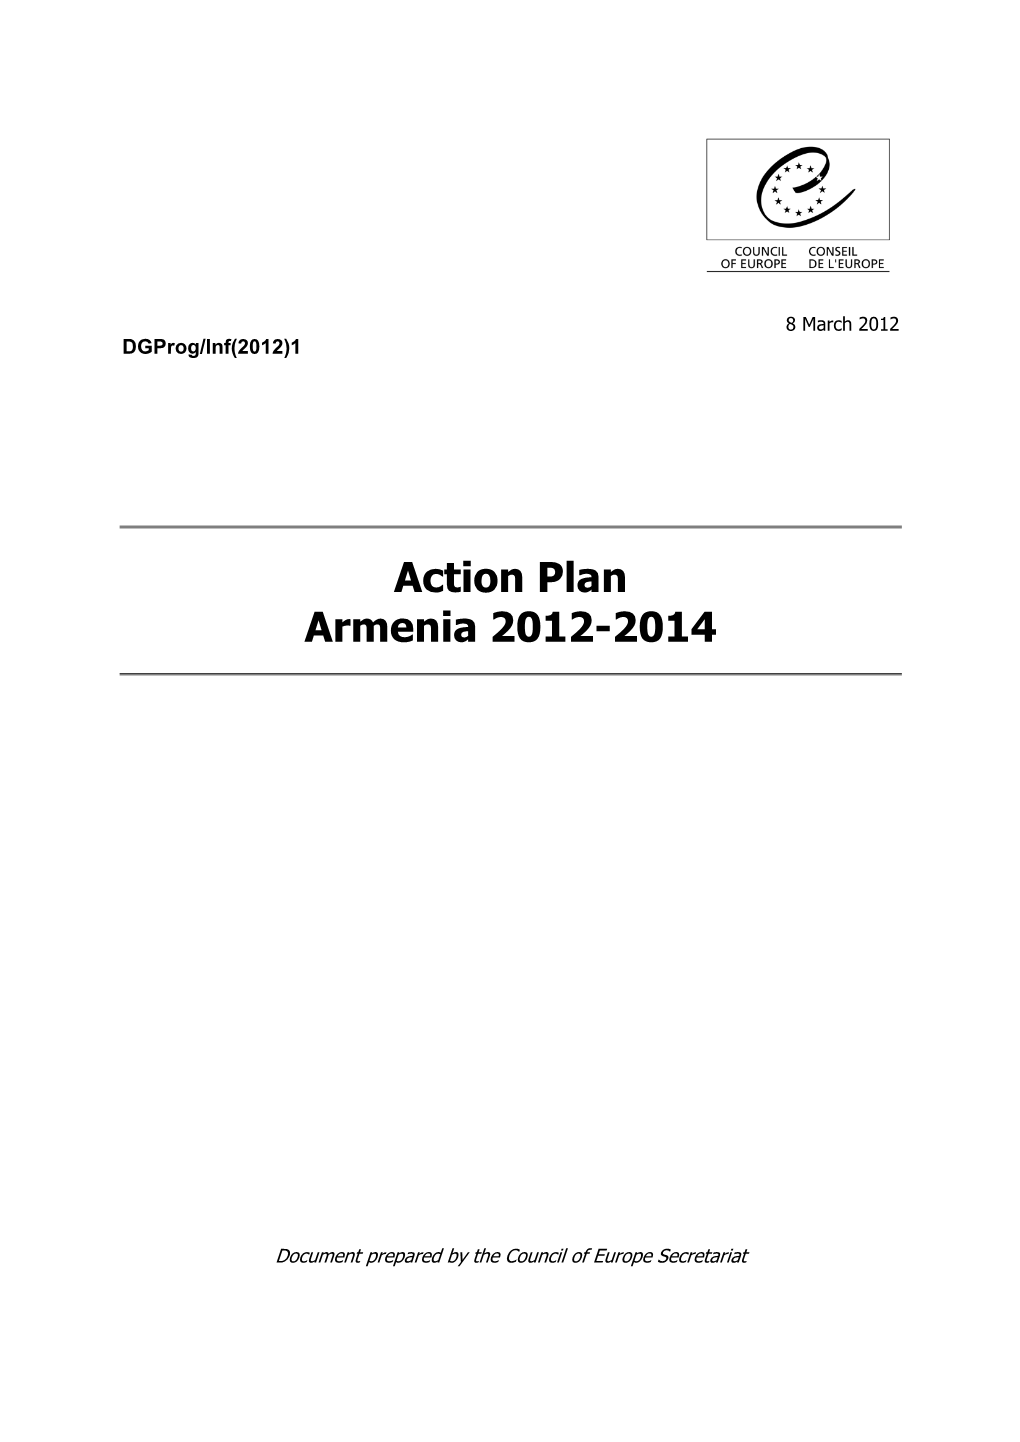 Action Plan Armenia 2012-2014